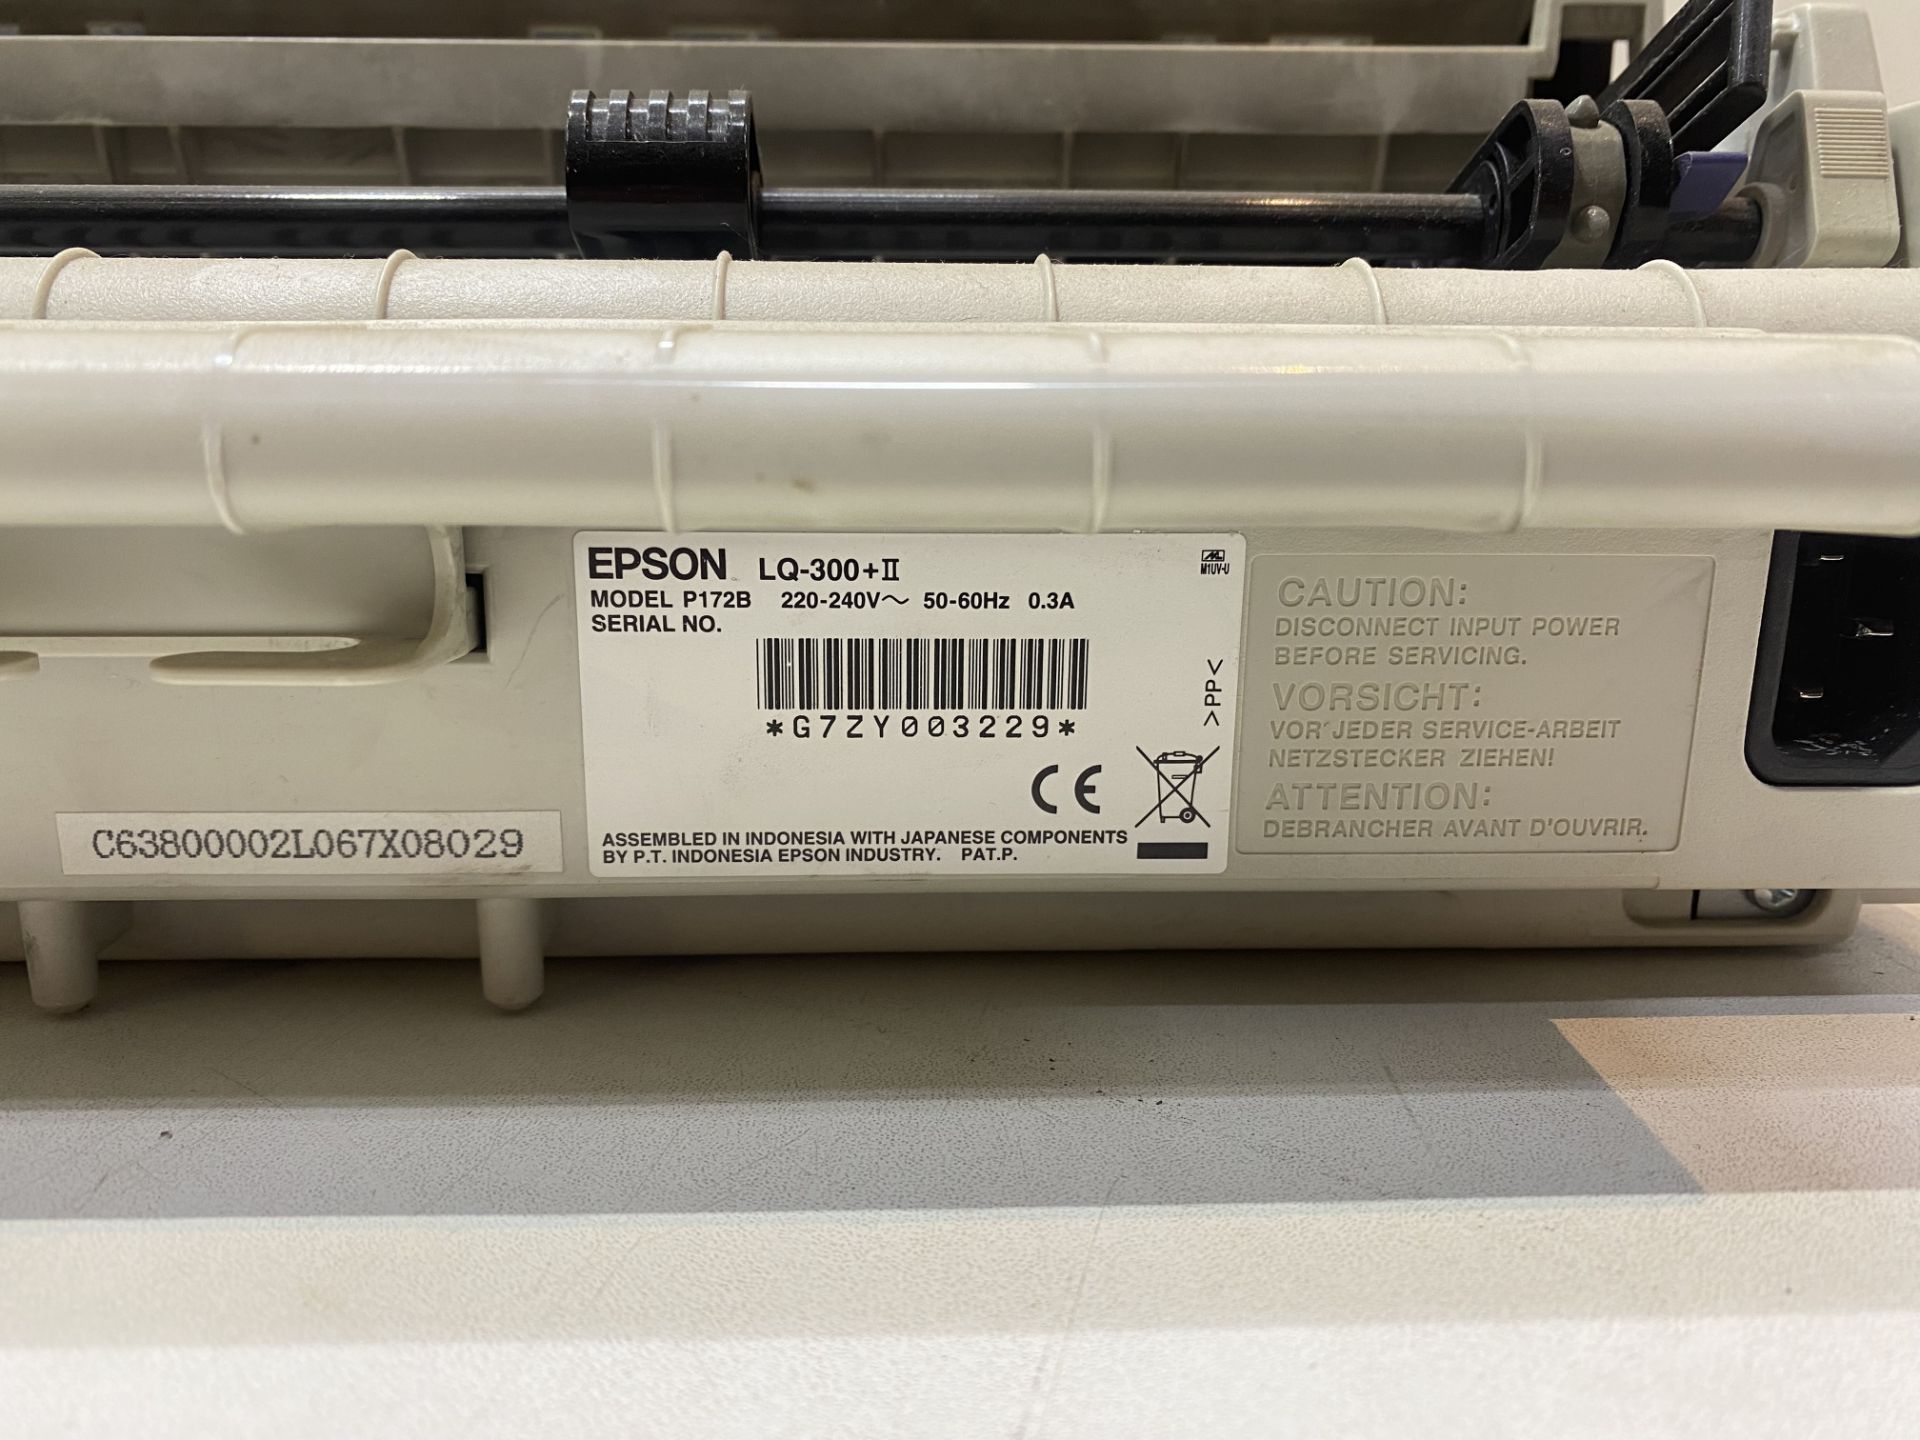 Epson P172b 24pin dot matrix line printer - Image 15 of 16